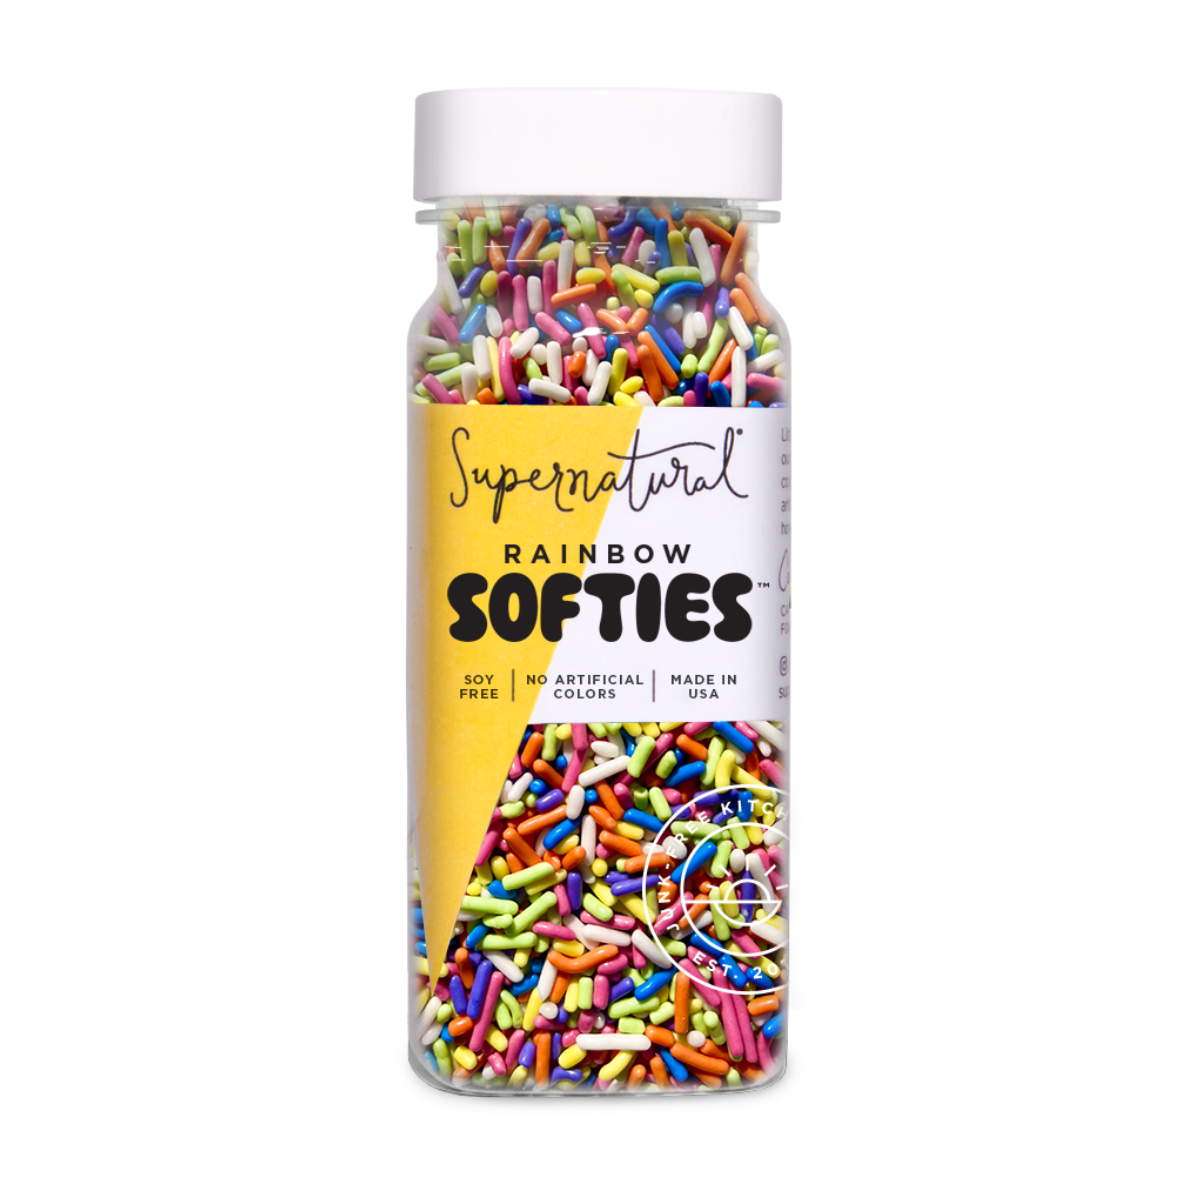 Supernatural Rainbow Softies Natural Sprinkles 3 Oz